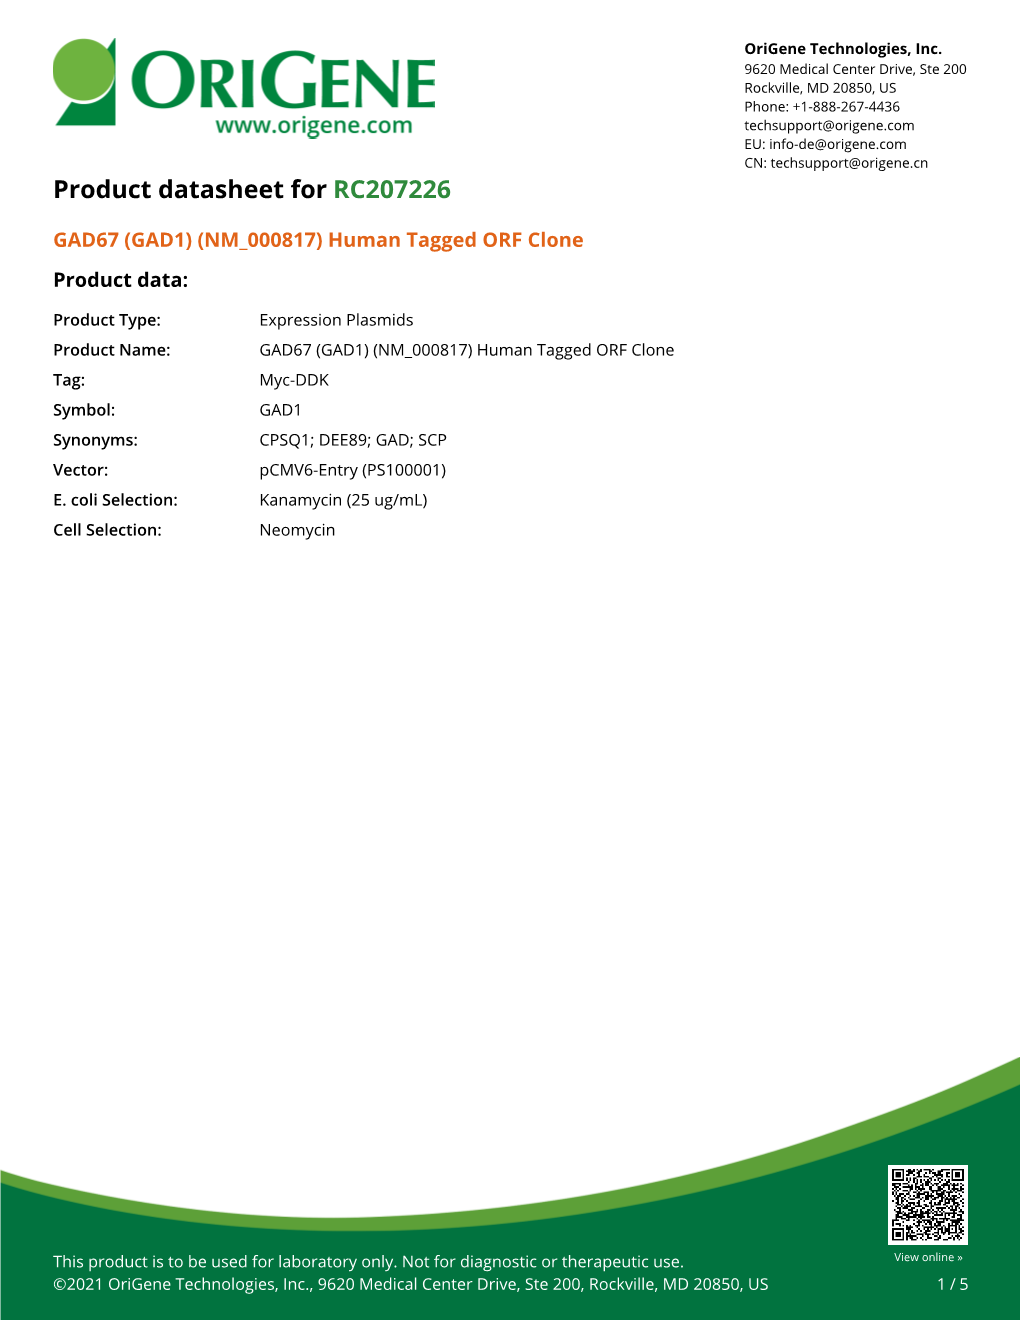 GAD67 (GAD1) (NM 000817) Human Tagged ORF Clone Product Data